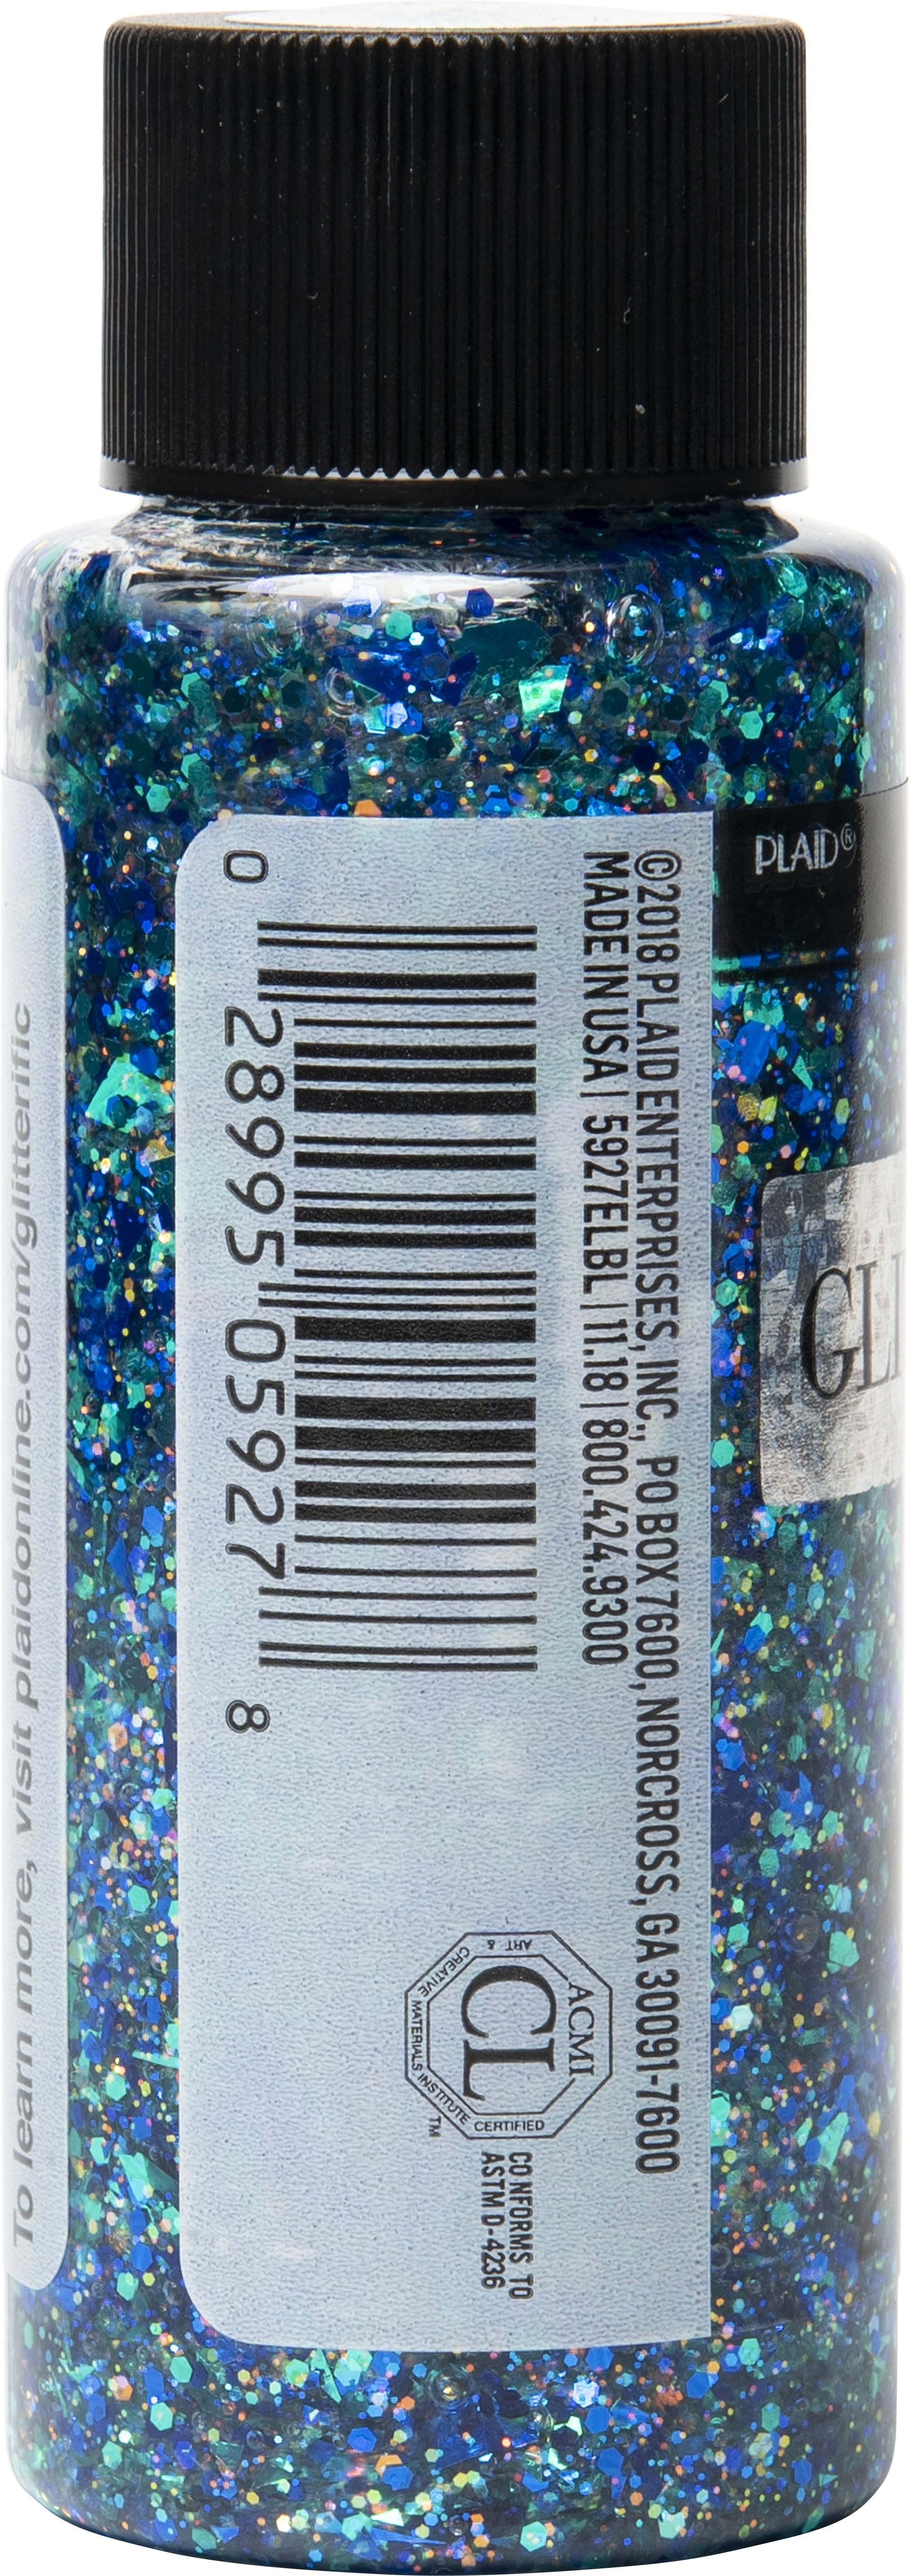 Plaid FolkArt Glow In The Dark Acrylic Paint - Blue, 2 oz, Bottle, BLICK  Art Materials